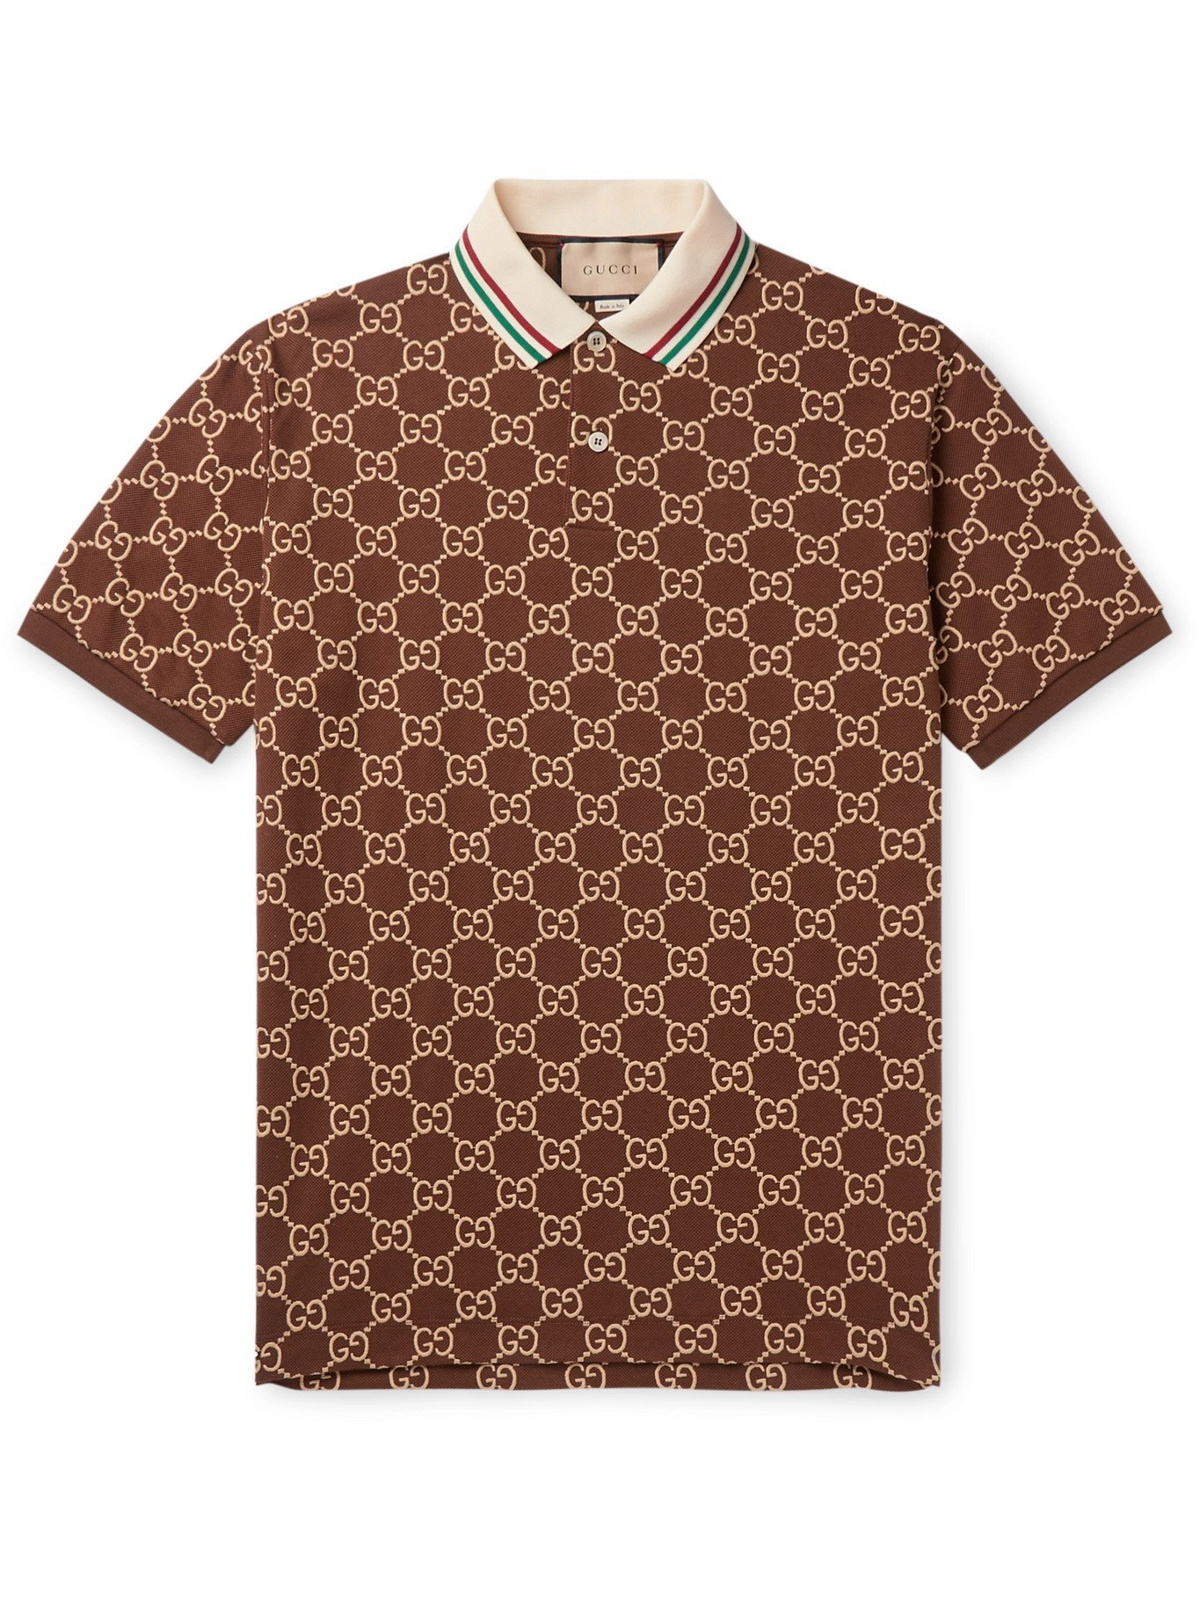 Gucci GG Brown Monogram Printed Cotton T Shirt S Gucci